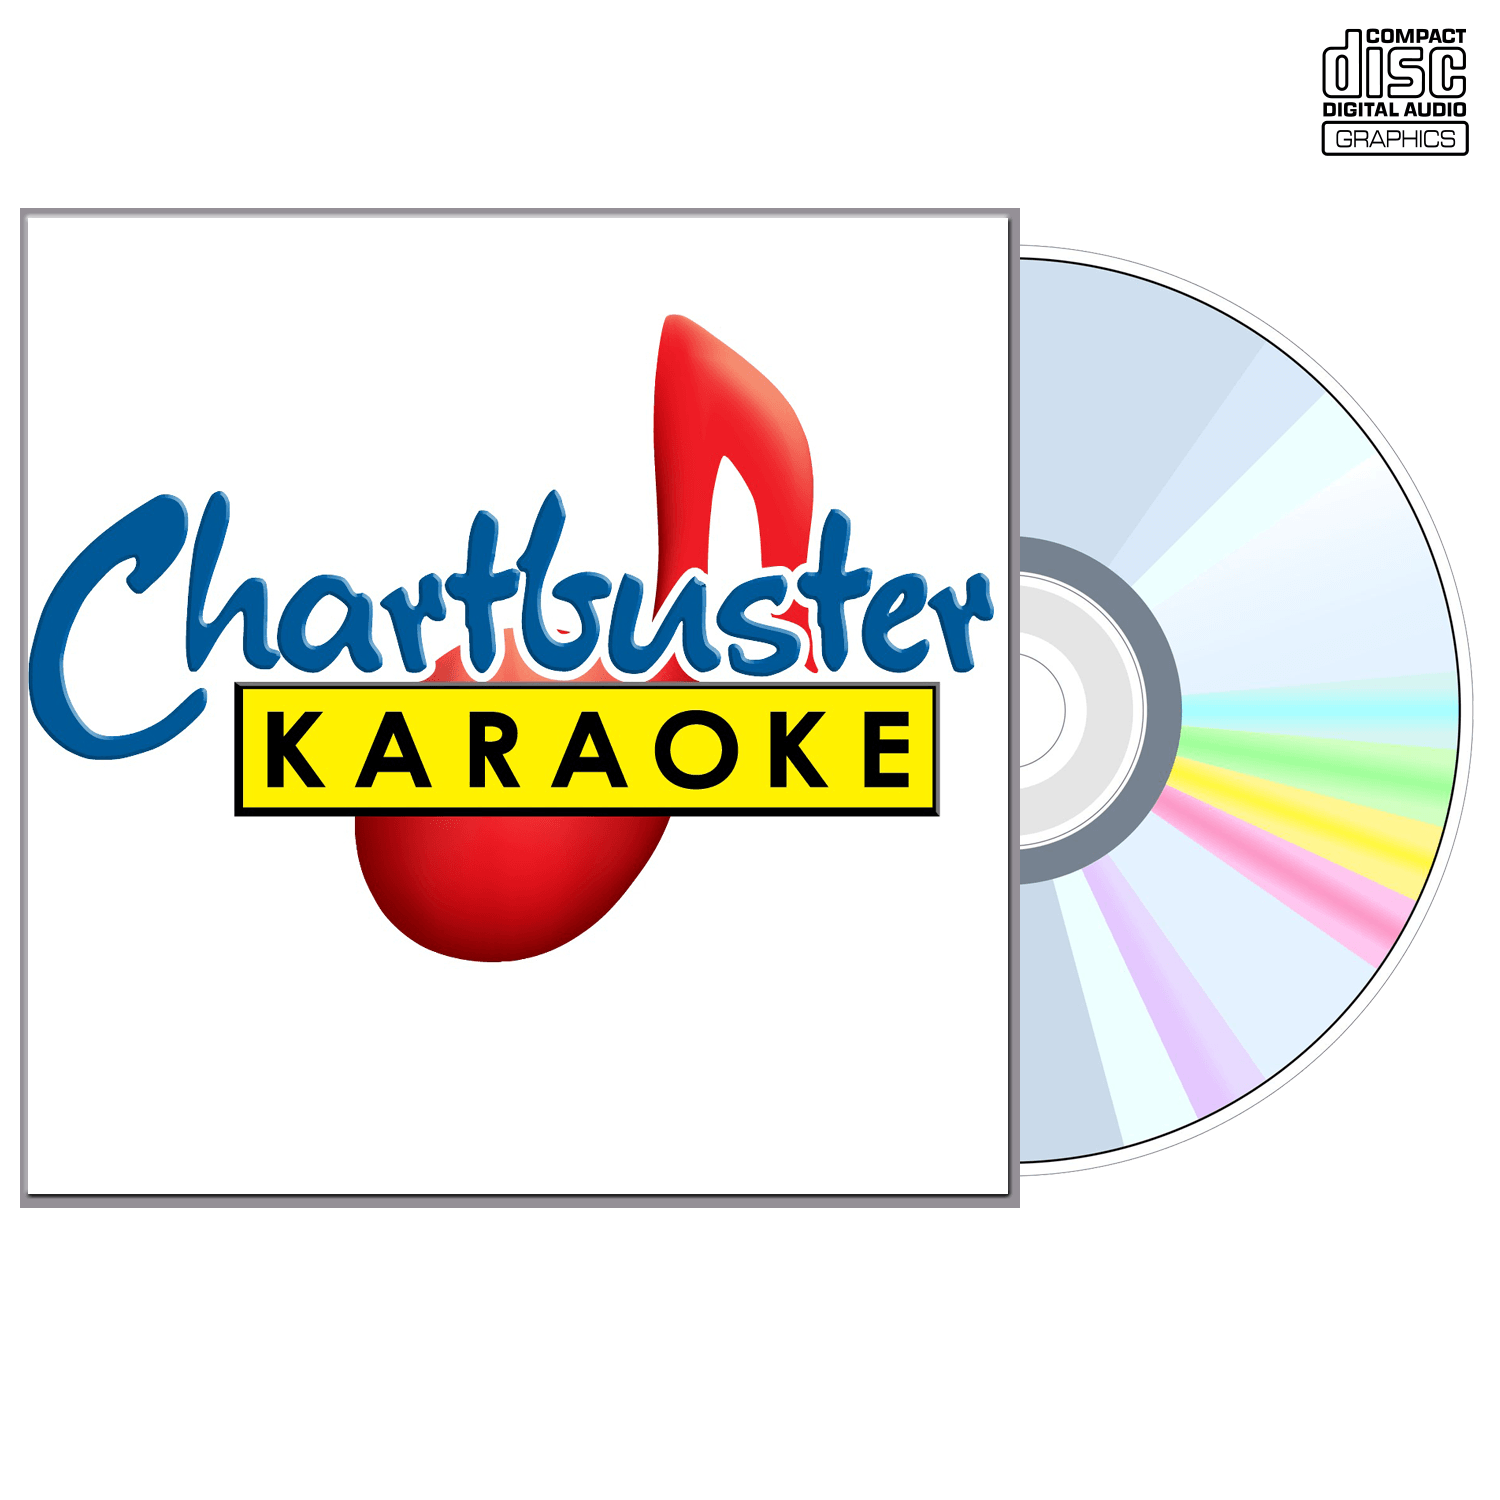 Johnny Cash Vol 1 - CD+G - Chartbuster Karaoke - Karaoke Home Entertainment